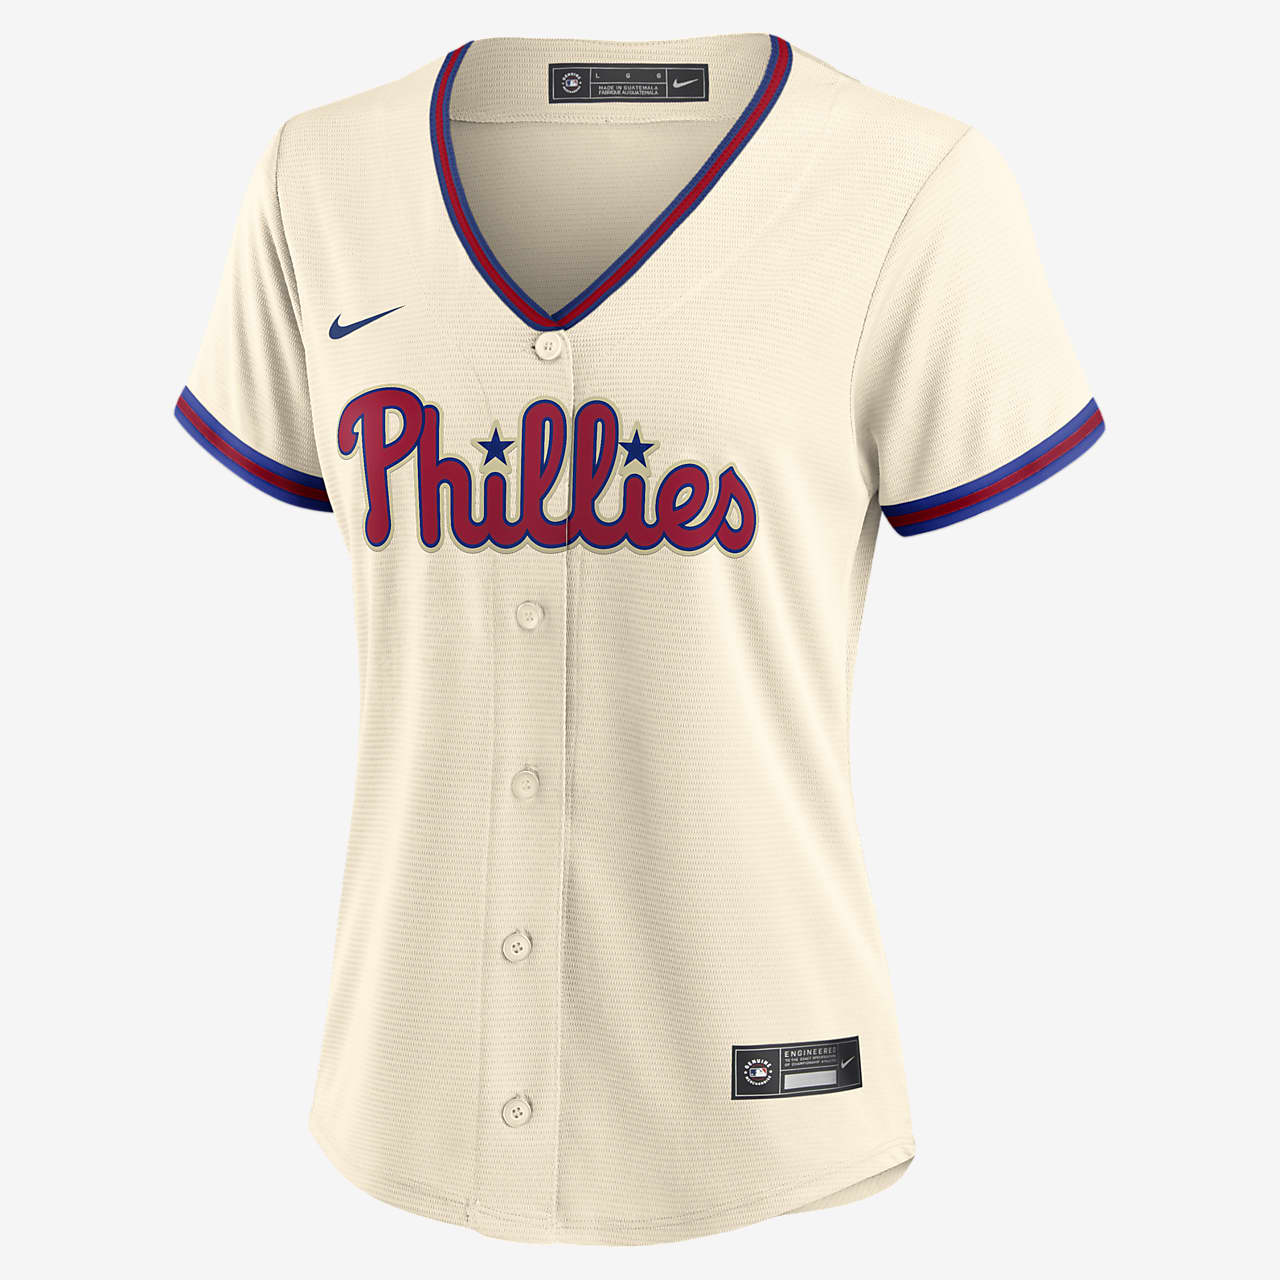 MLB Philadelphia Phillies Women's Replica Baseball Jersey.